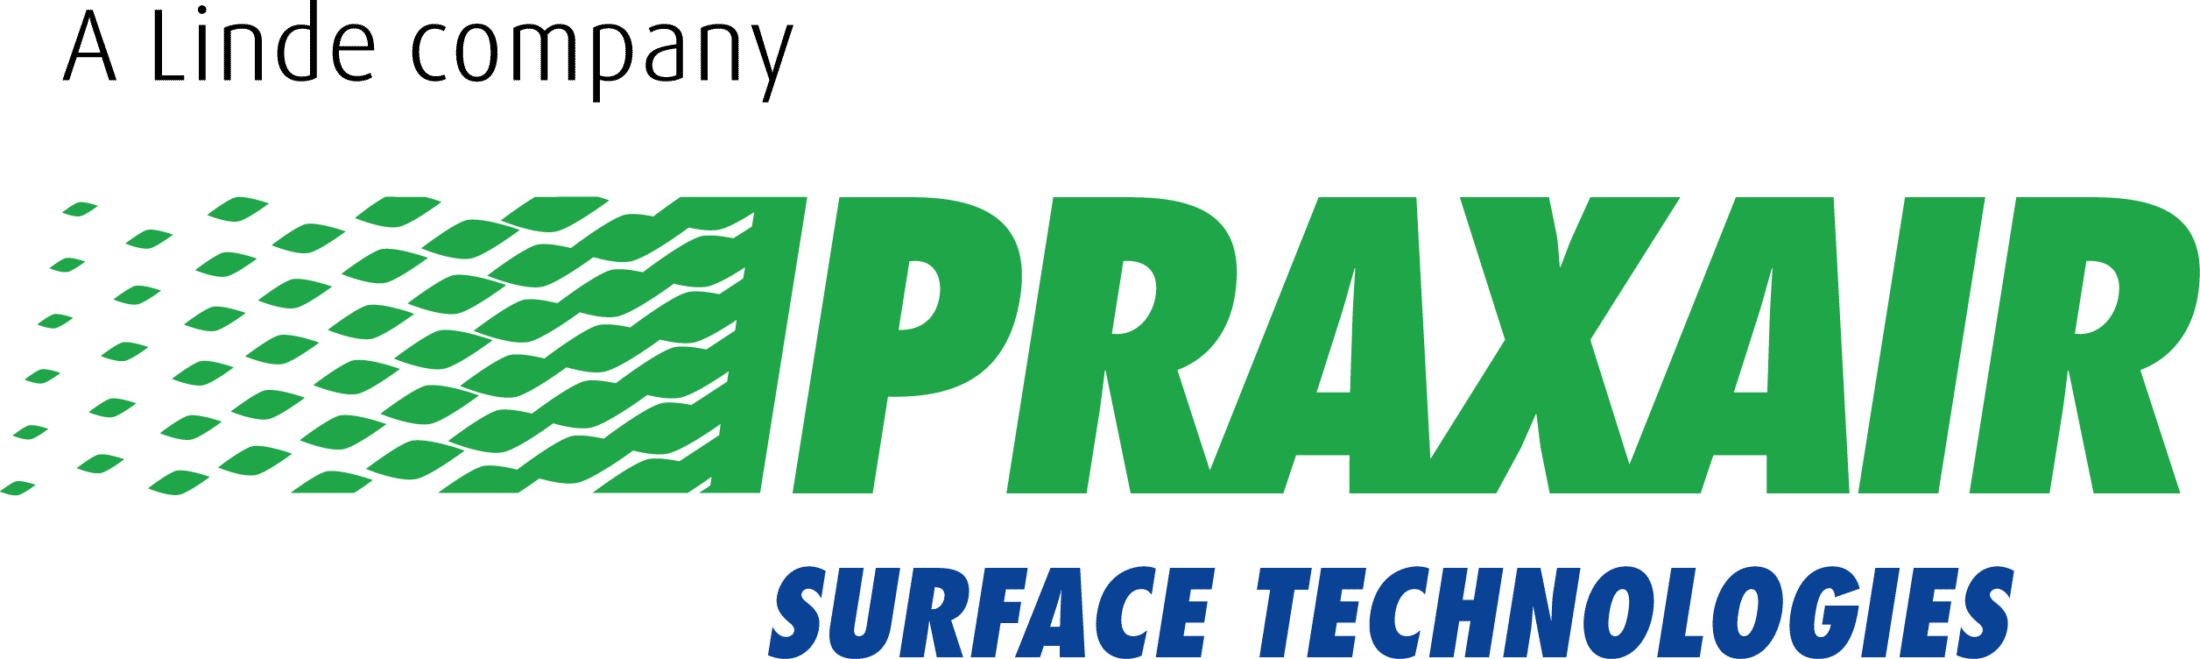 Praxair Surface Technologies